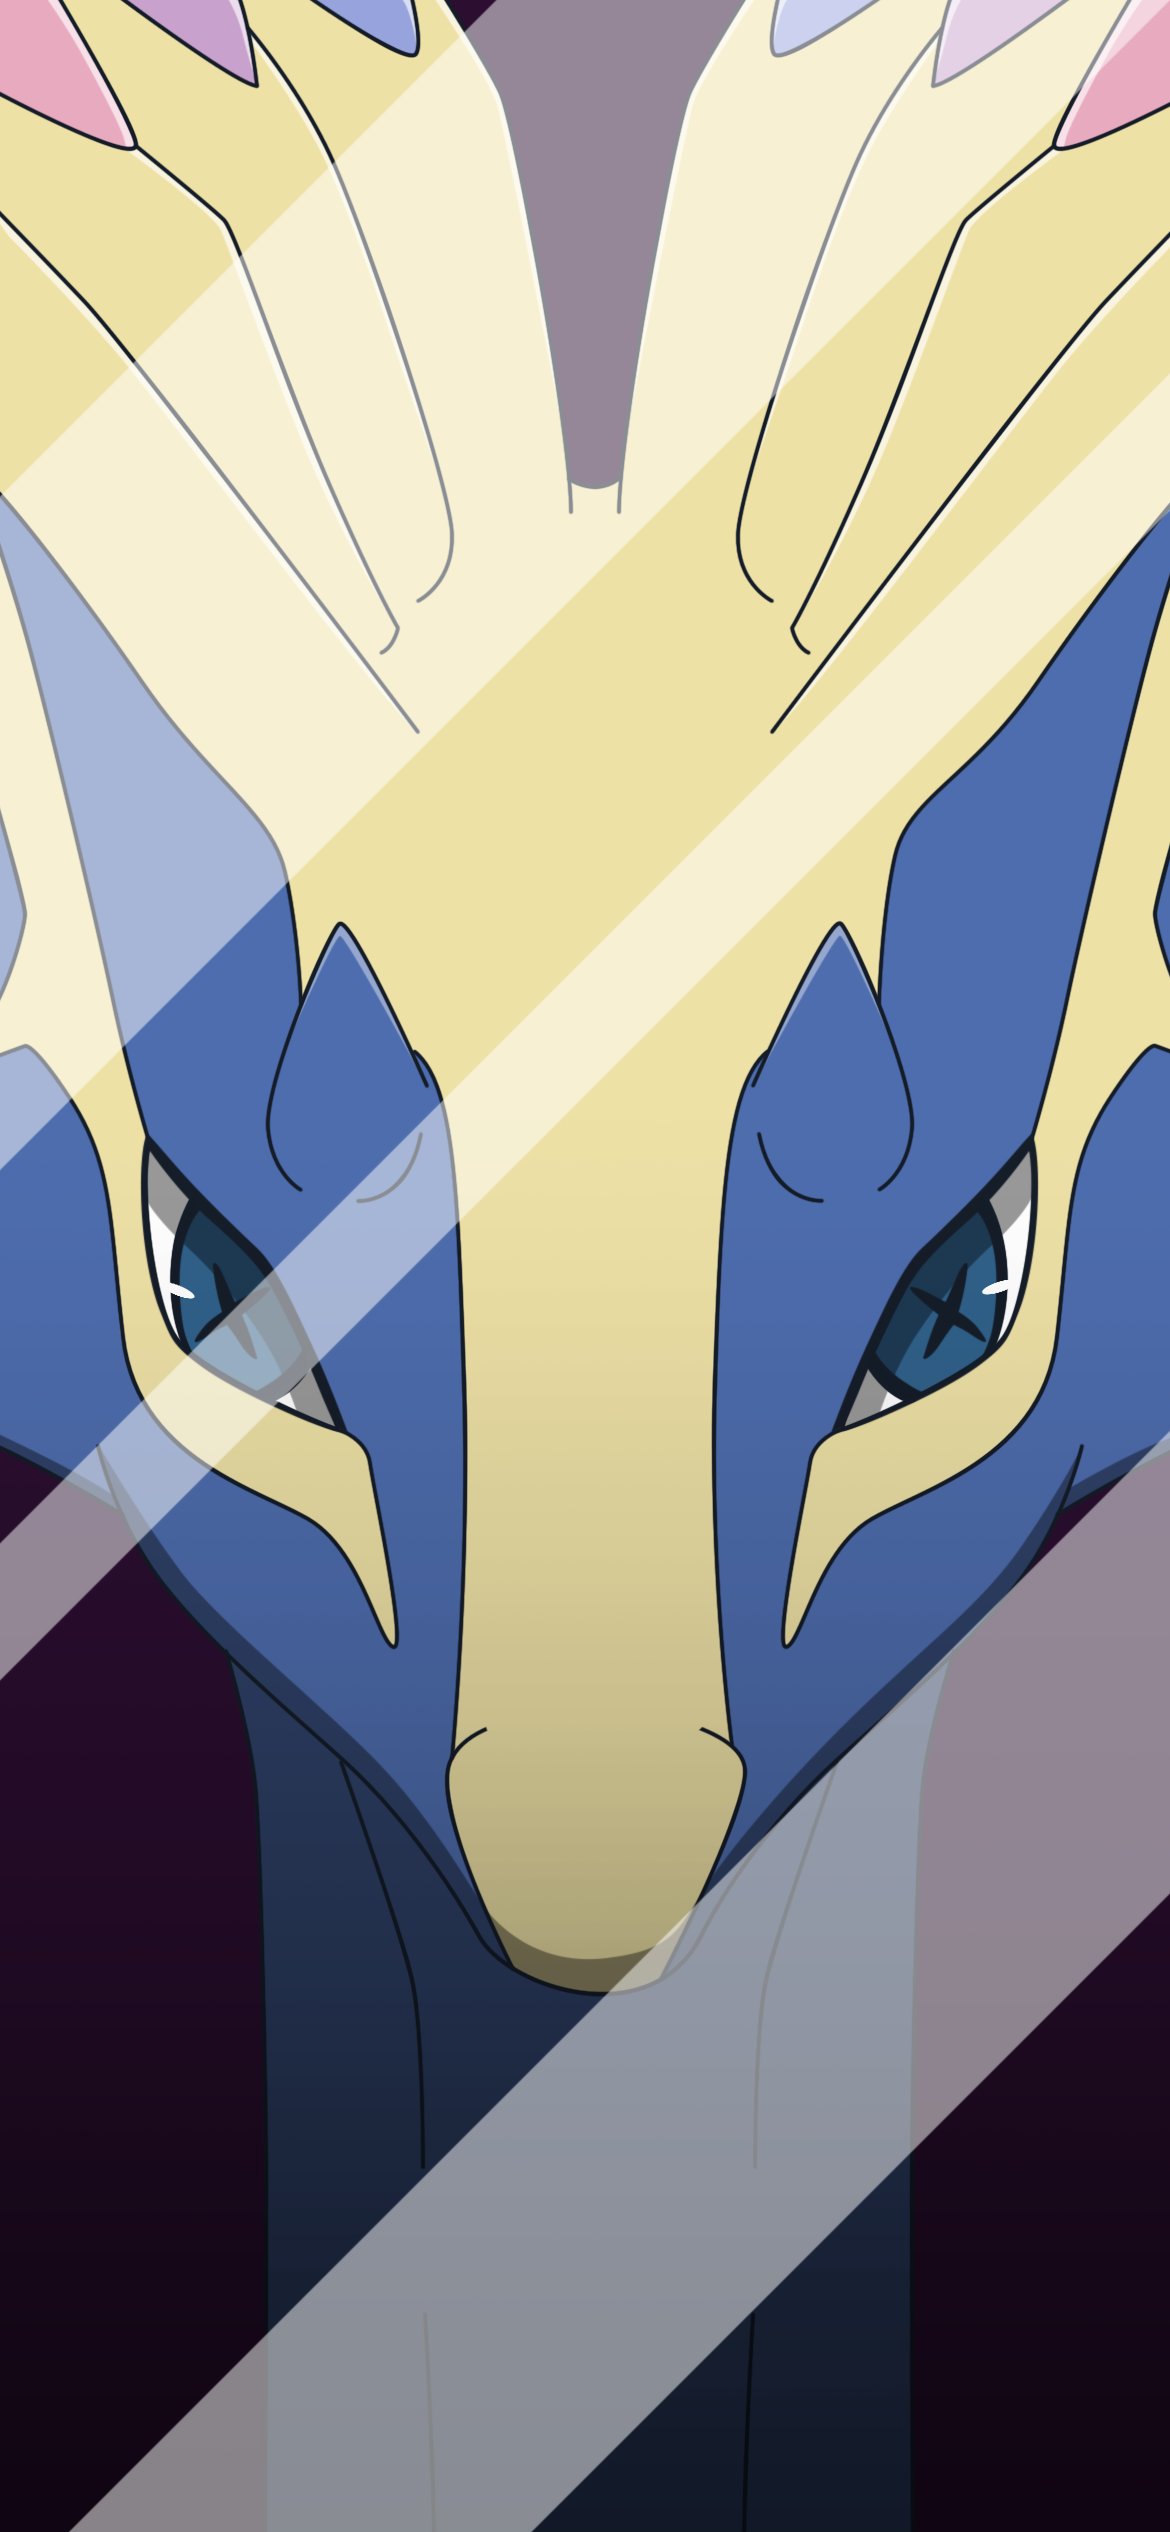 All0412 ✪ on X: Pokémon MW: Ash-Greninja #Kalos #Shiny #Fanart